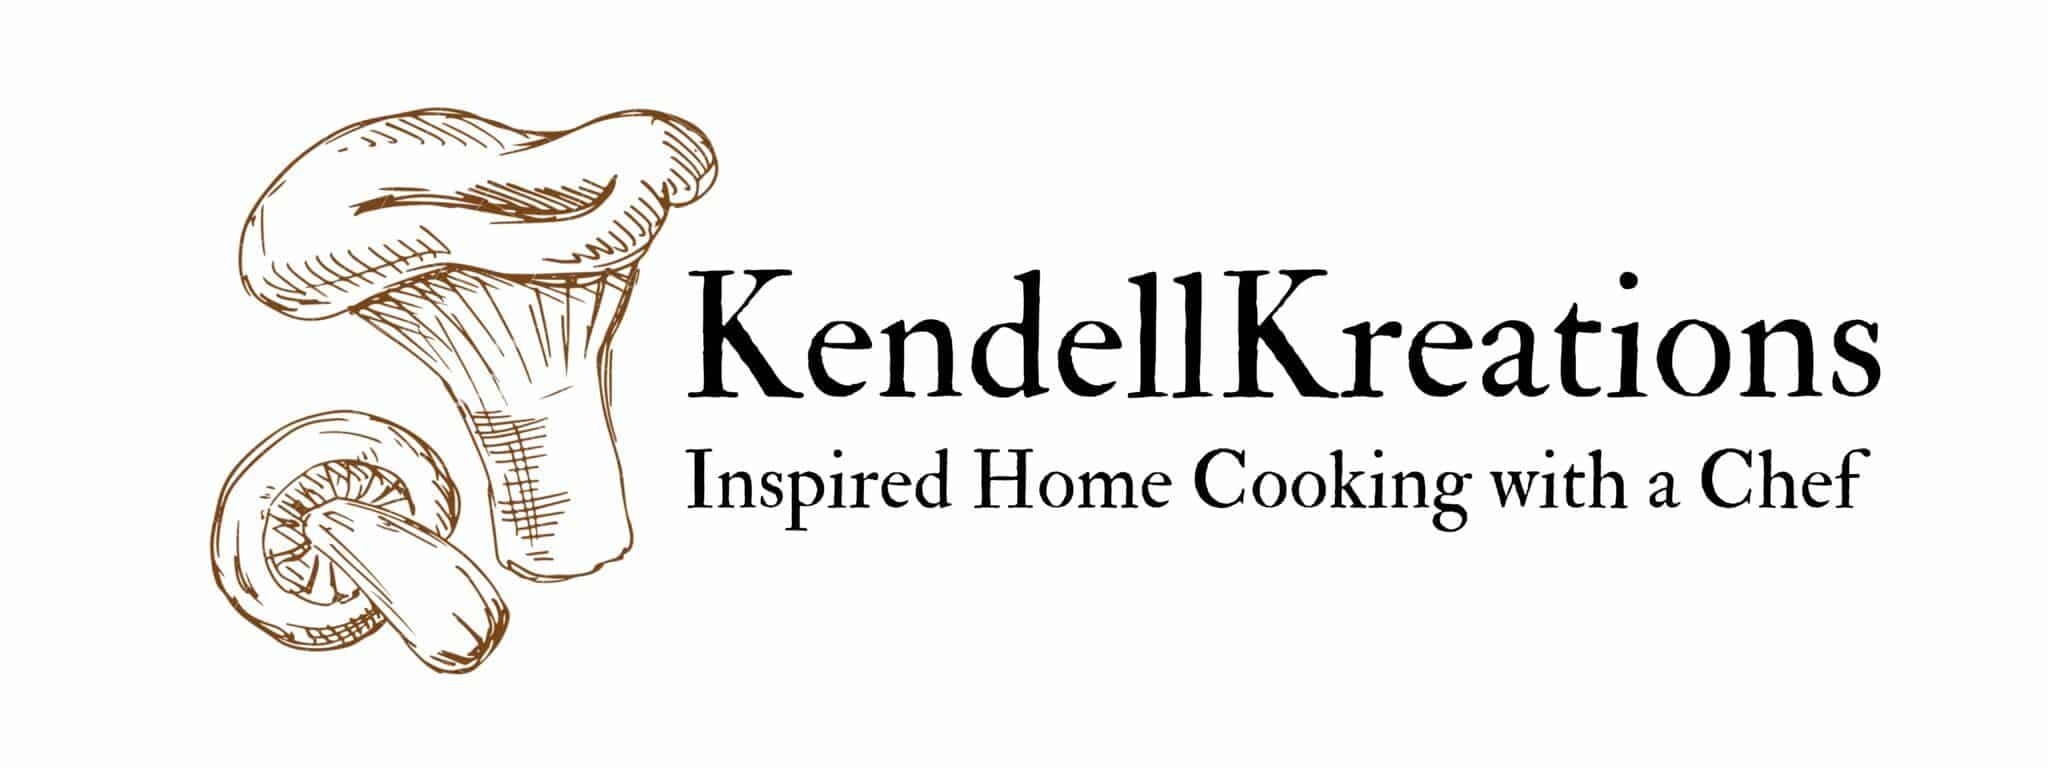 KendellKreations logo